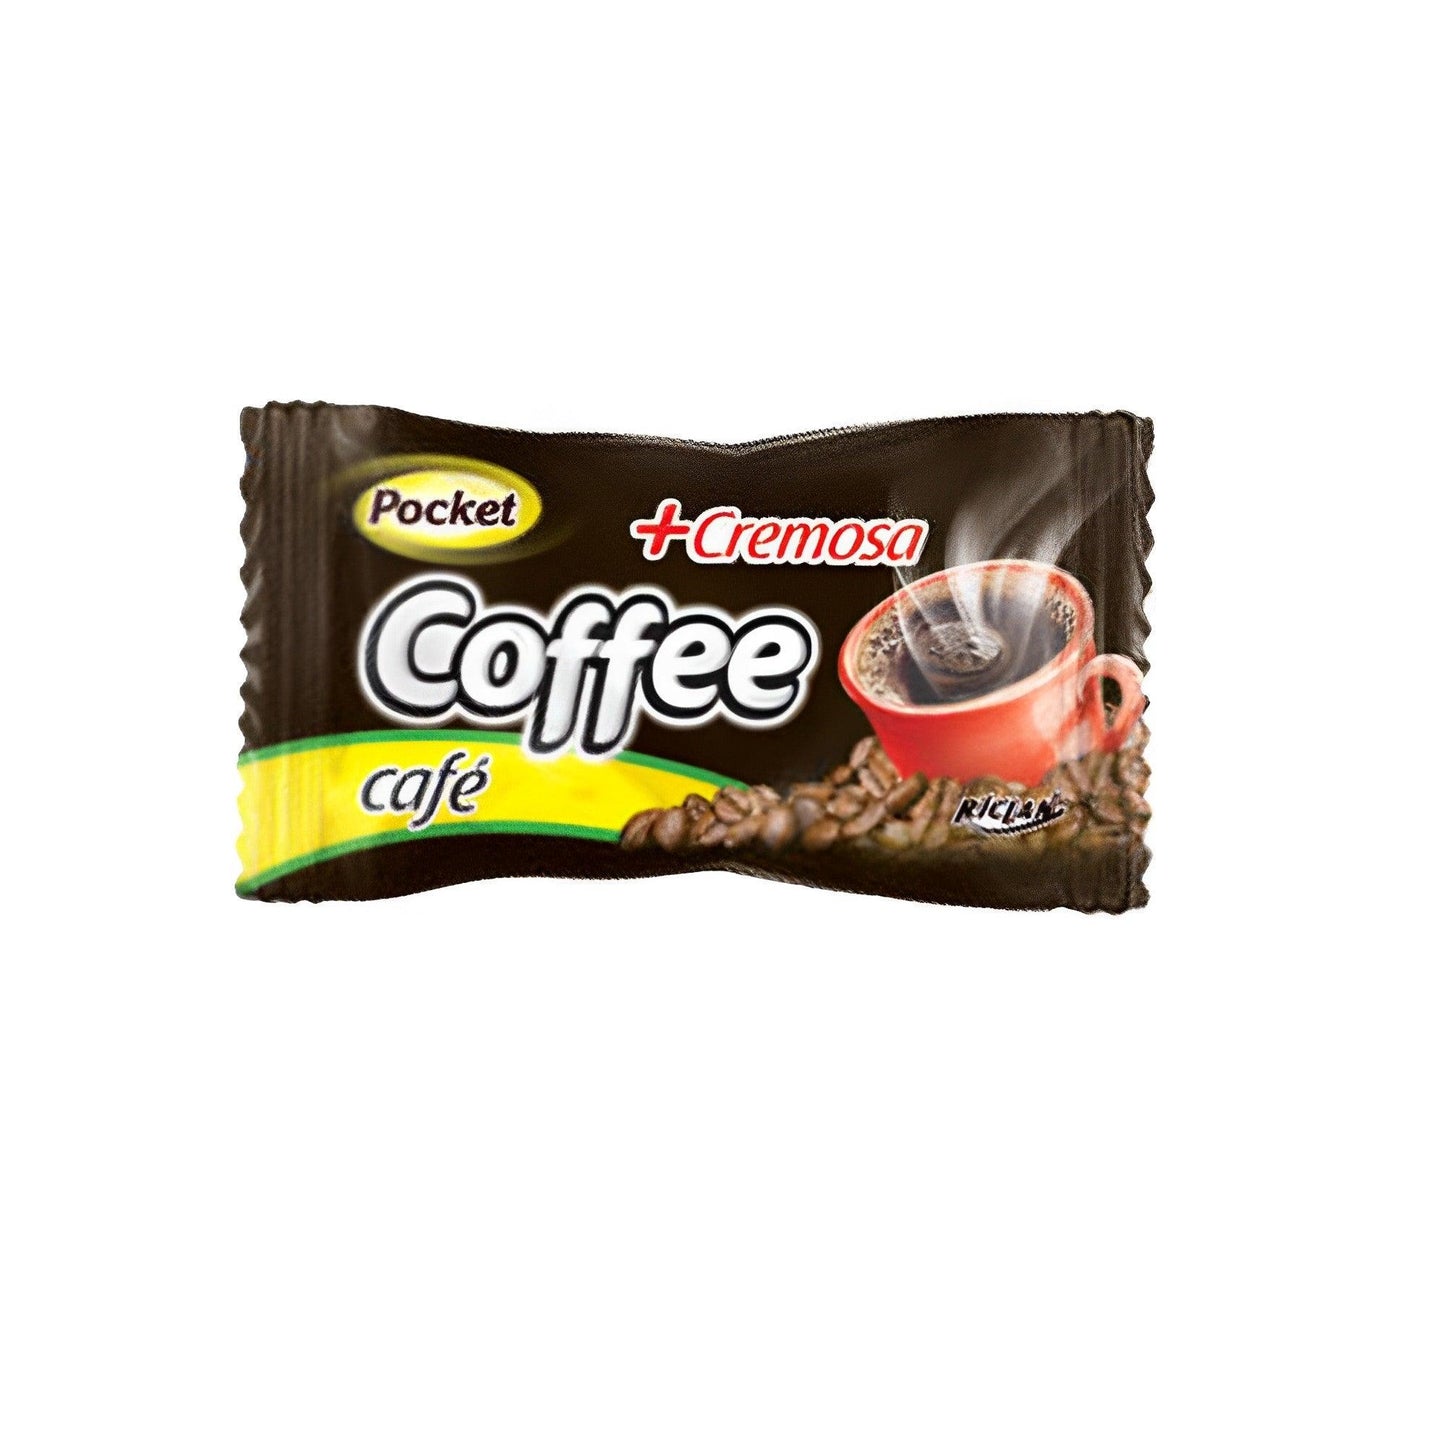 Riclan Freegells Pocket Creamy Coffee Hard Candy 17.64 oz. (Pack of 2) = 1kg - Brazilian Shop